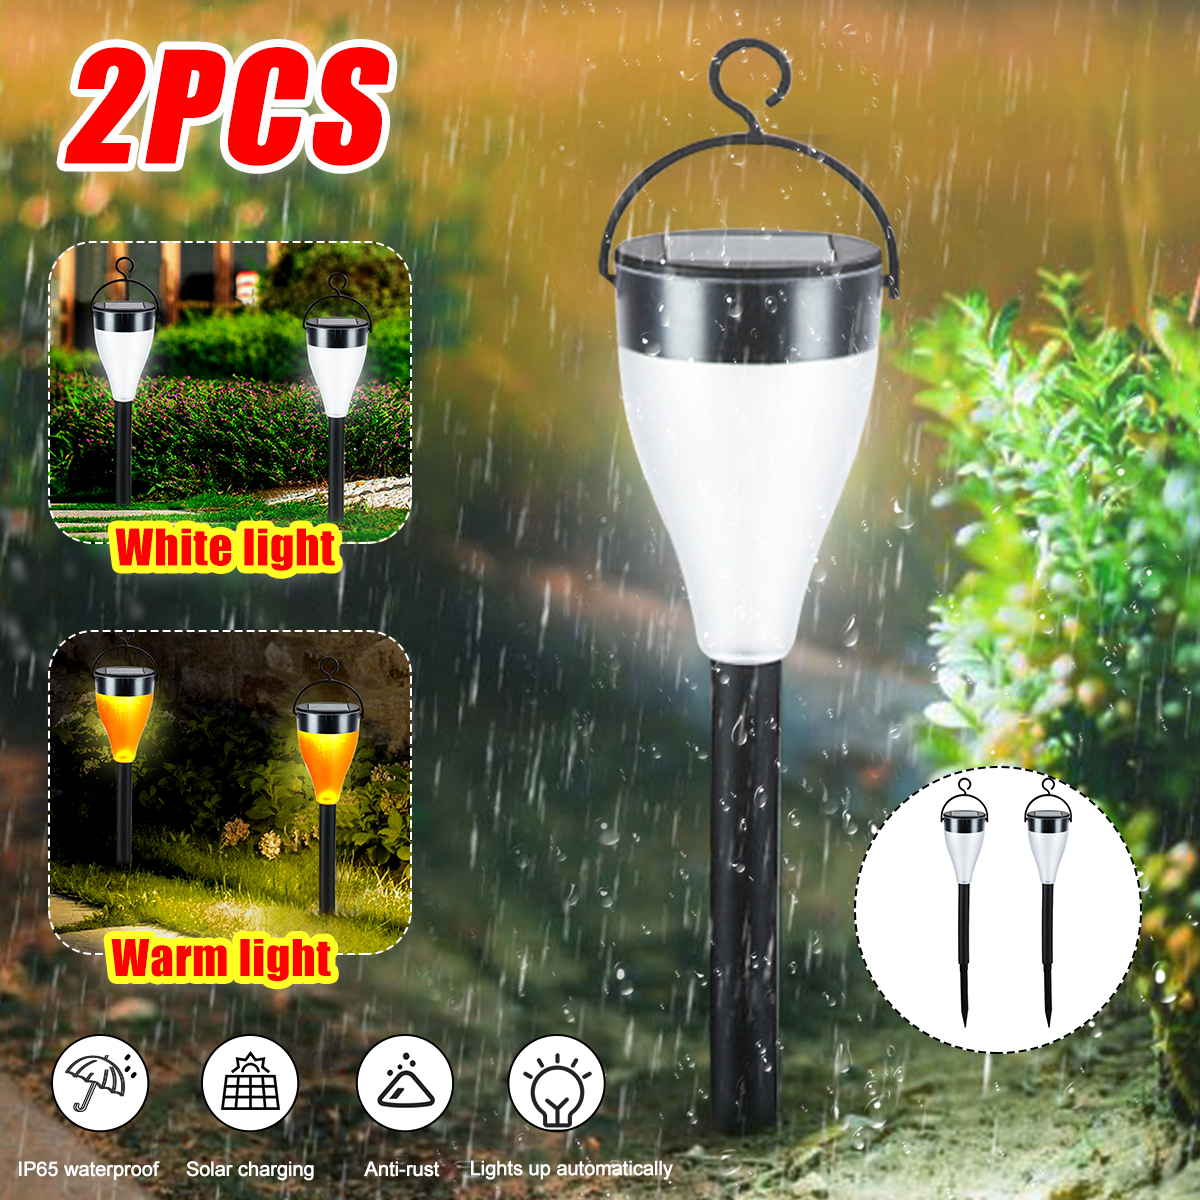 2PCS-Auto-Sensing-LED-Solar-Lamp-Garden-Lamps-For-Outdoor-Patio-Lawn-1755244-1